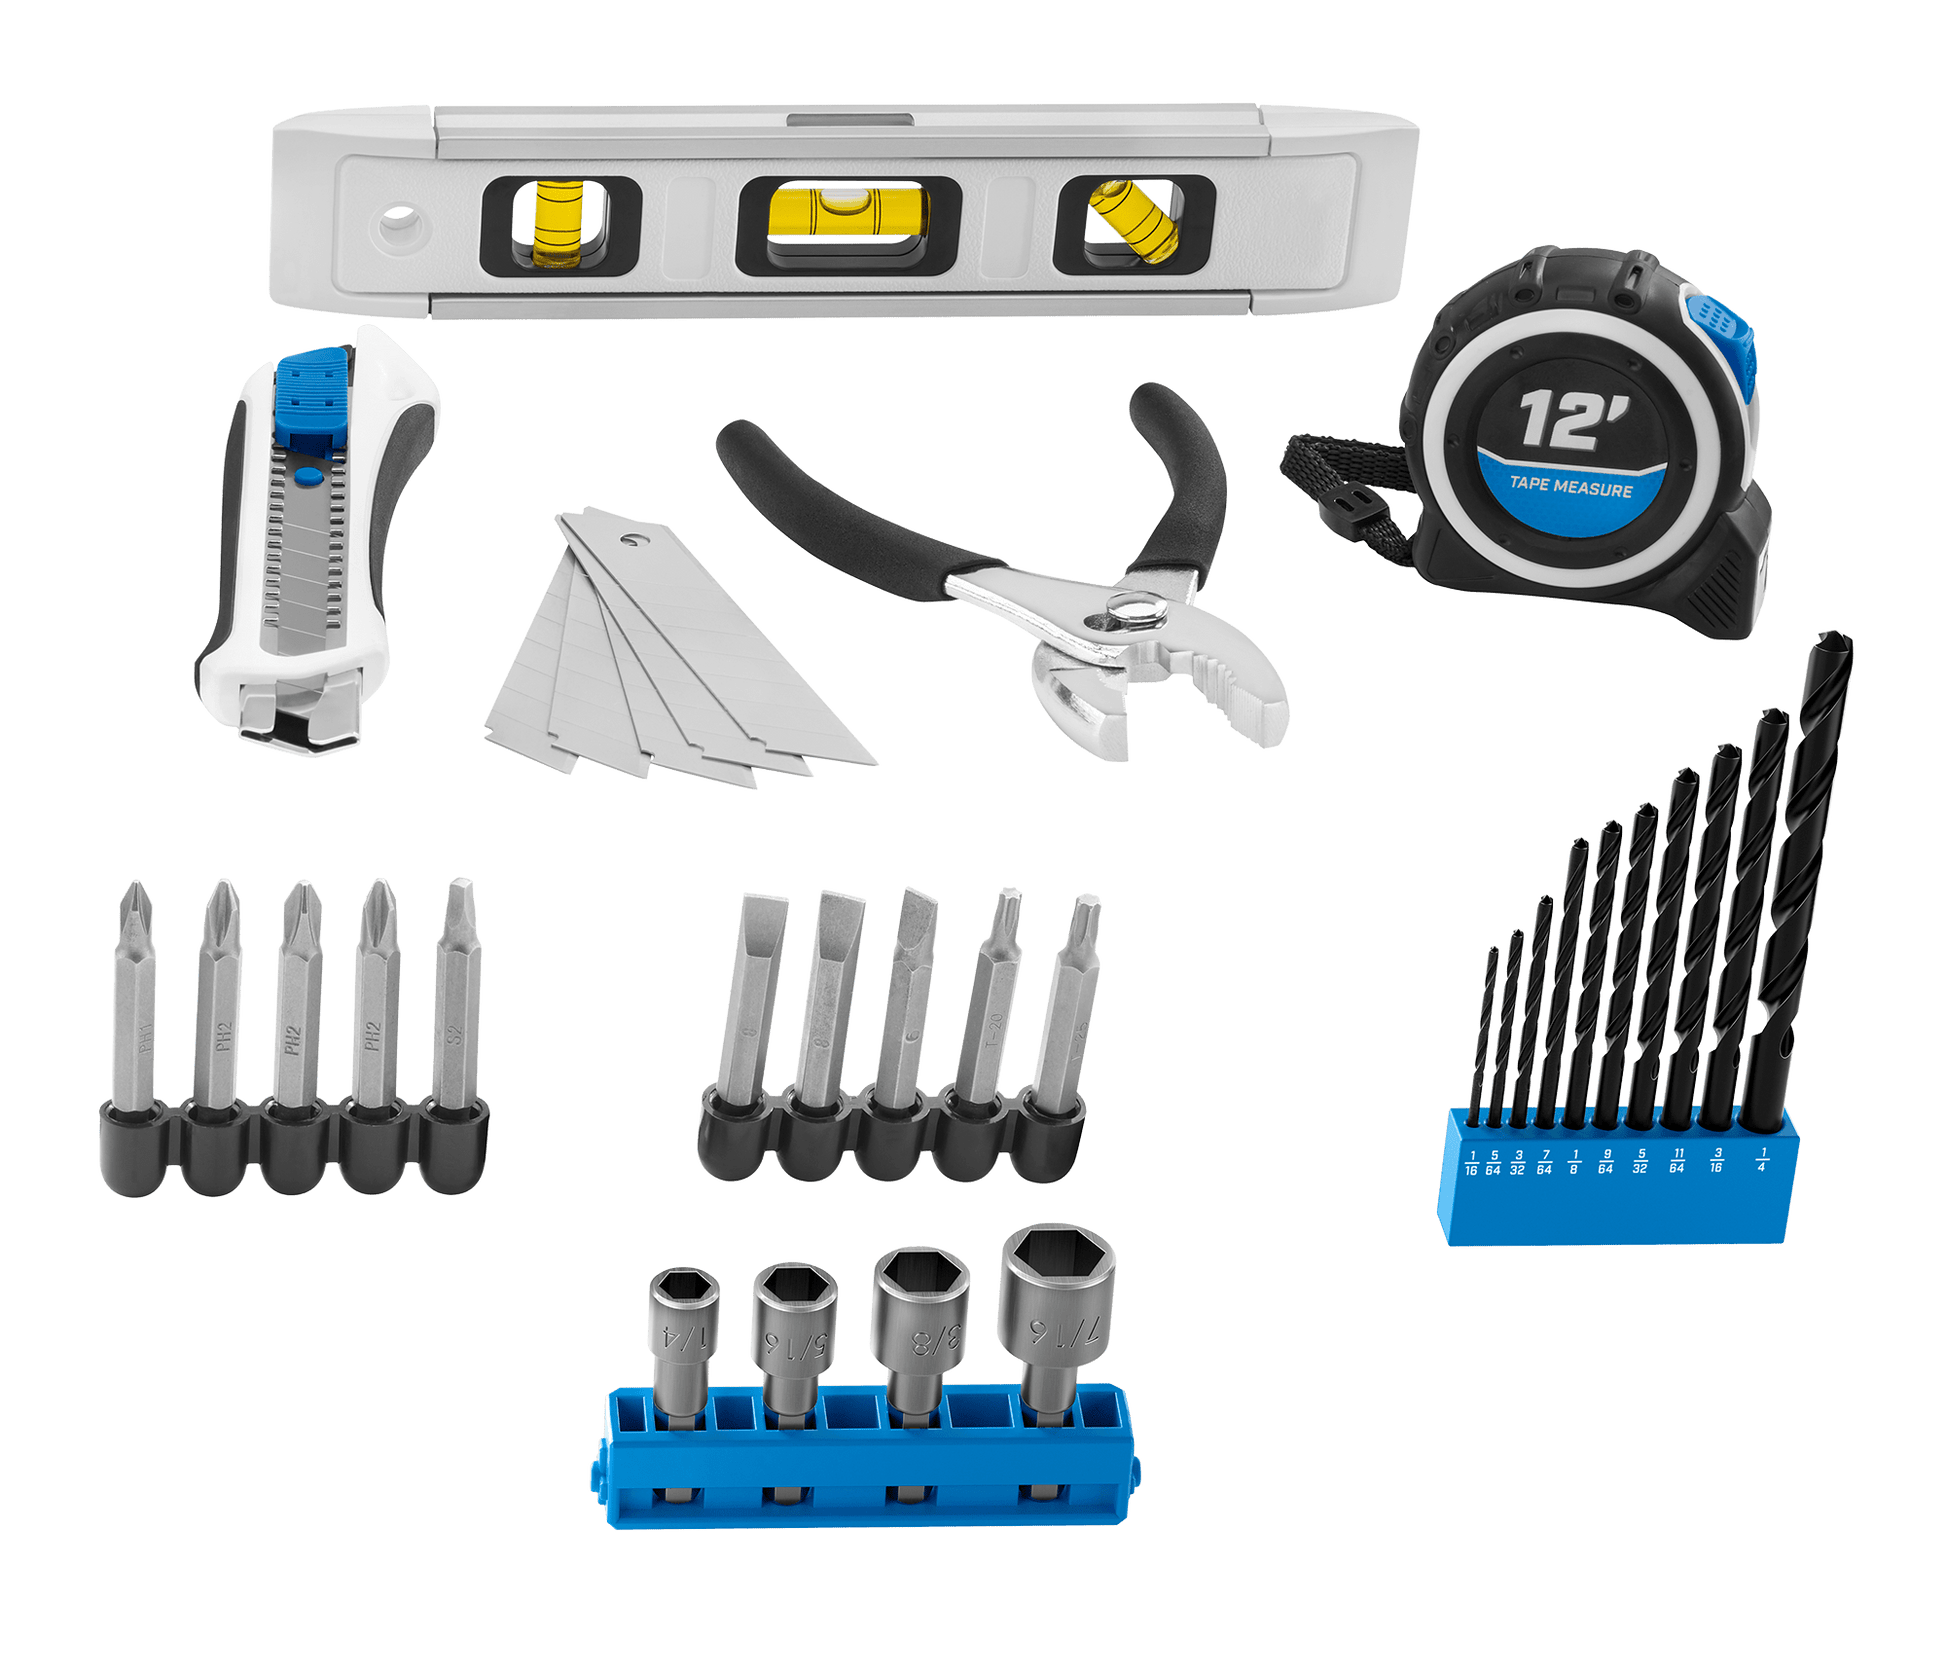 20V 3/8” Cordless Drill/Driver Combo Kit + Accessories (Level, Tape Measure, Slide Knife, Pliers)